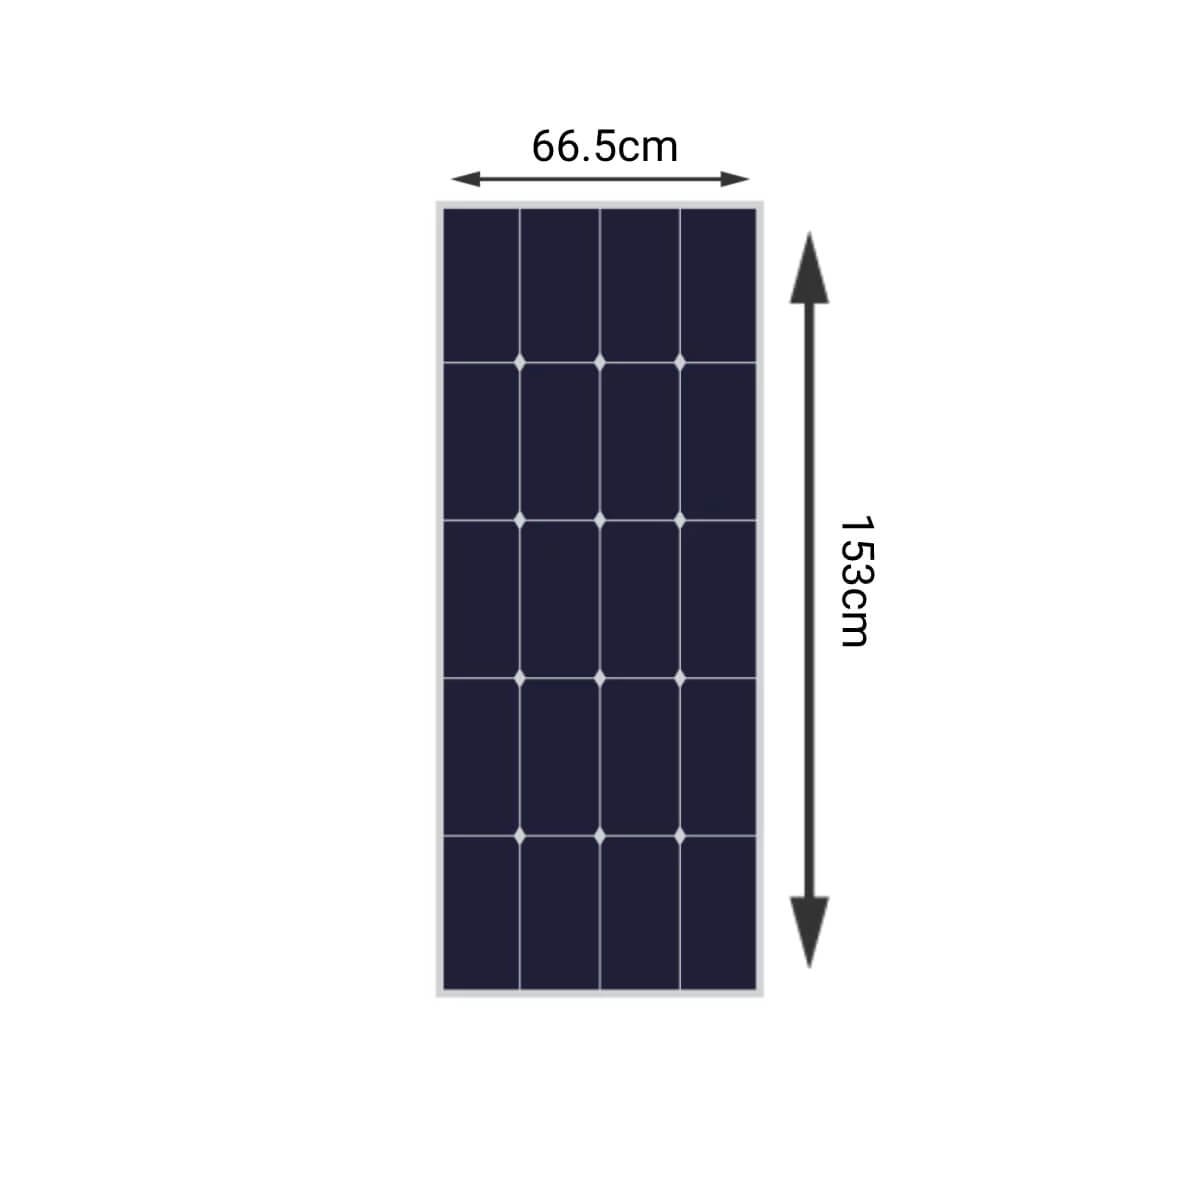 400W Flexible Solar Panel Kit - 2x 200W dimensions narrow